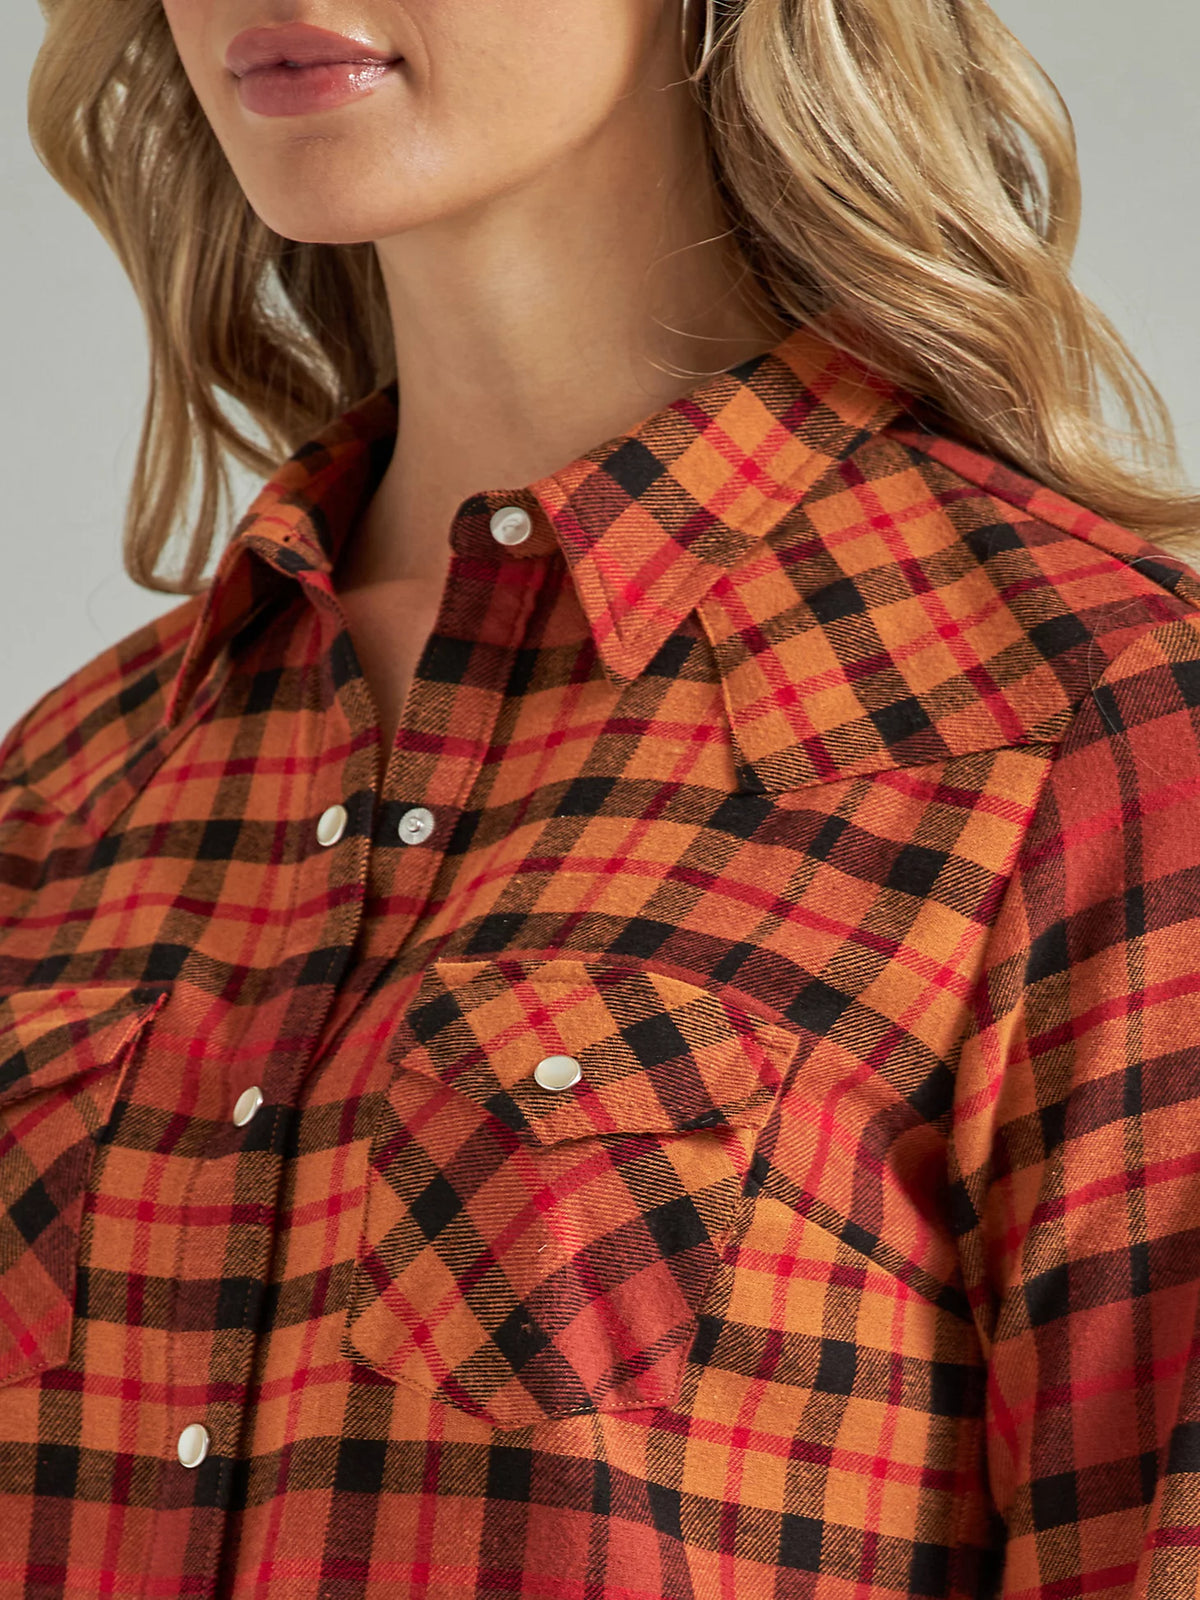 Wrangler Women's Long Sleeve Plaid Flannel Western Snap Shirt in Adobe